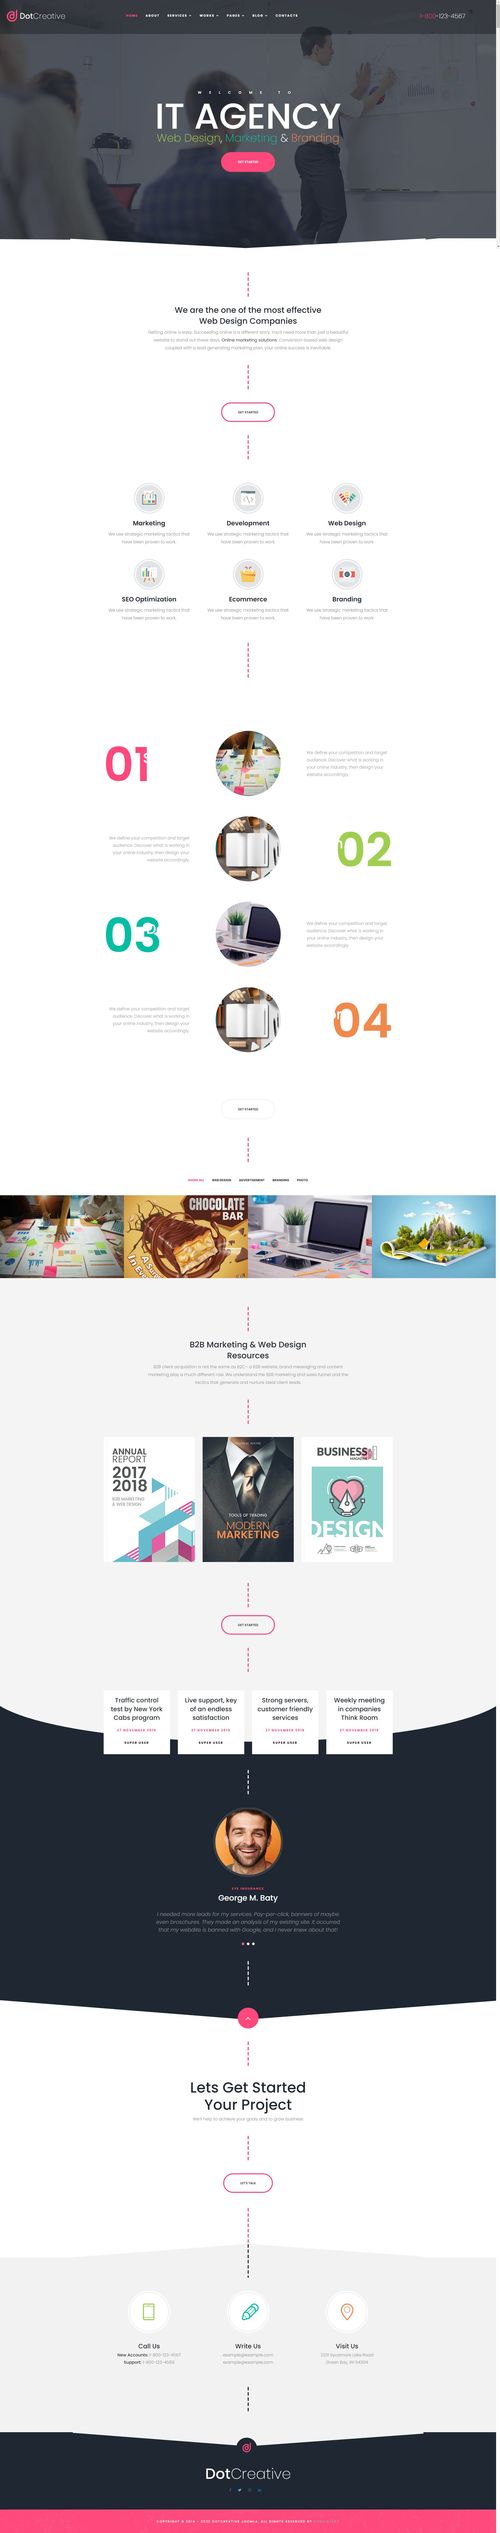 DotCreative - Web Design Agency Websites Joomla Template